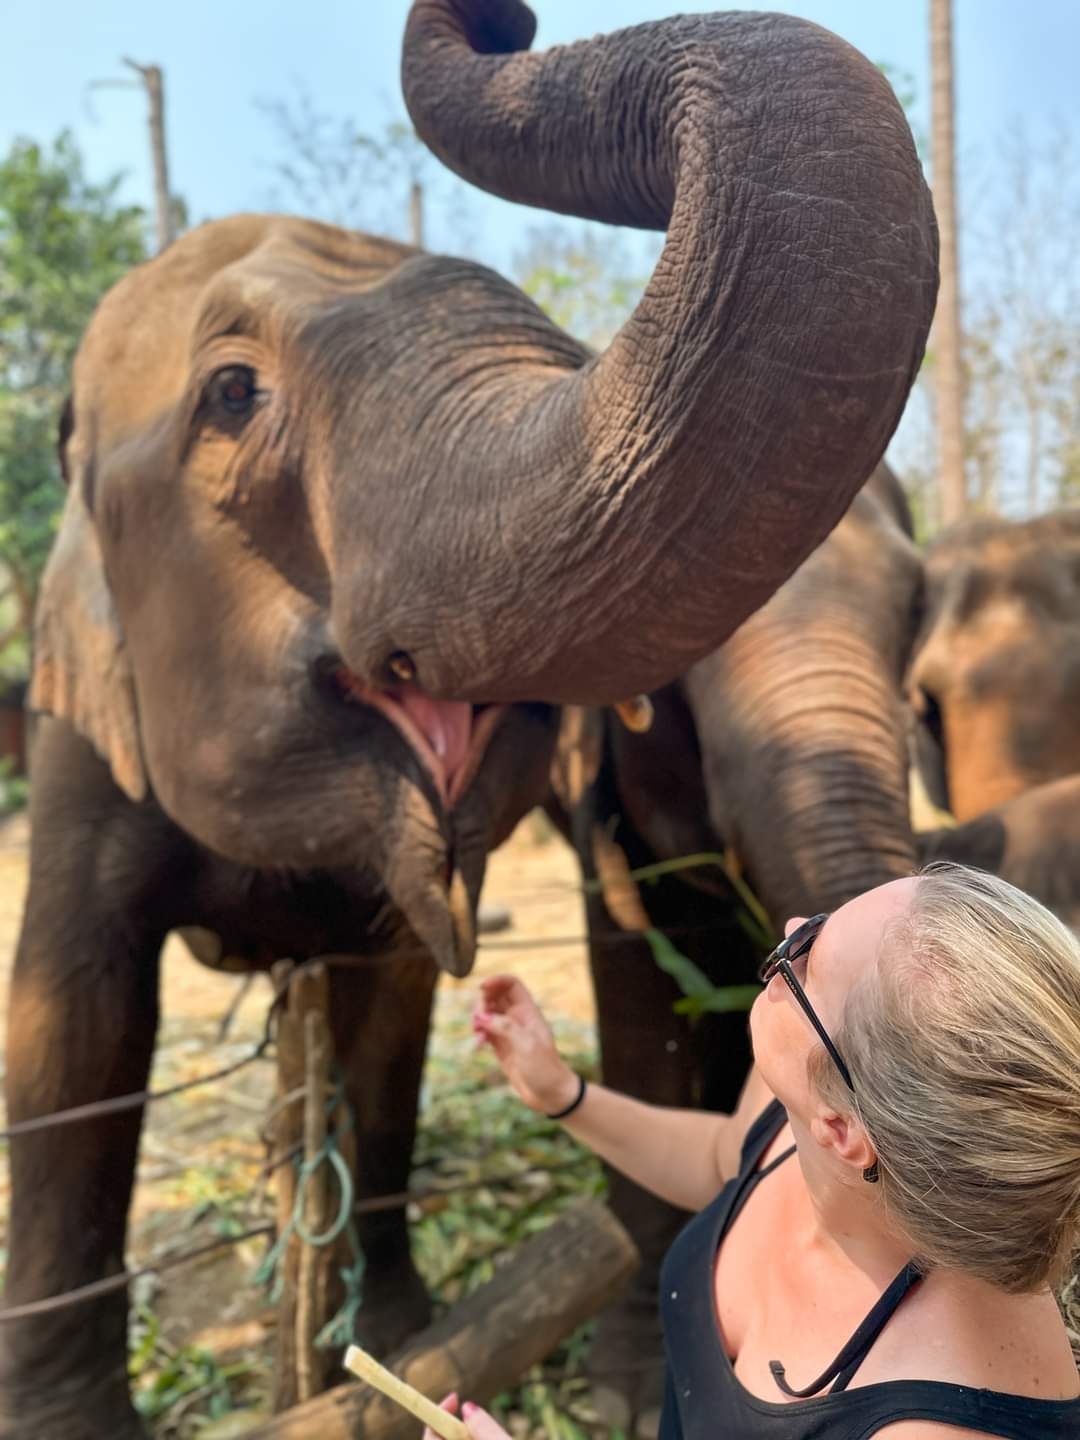 Extra trip feed elephants. 